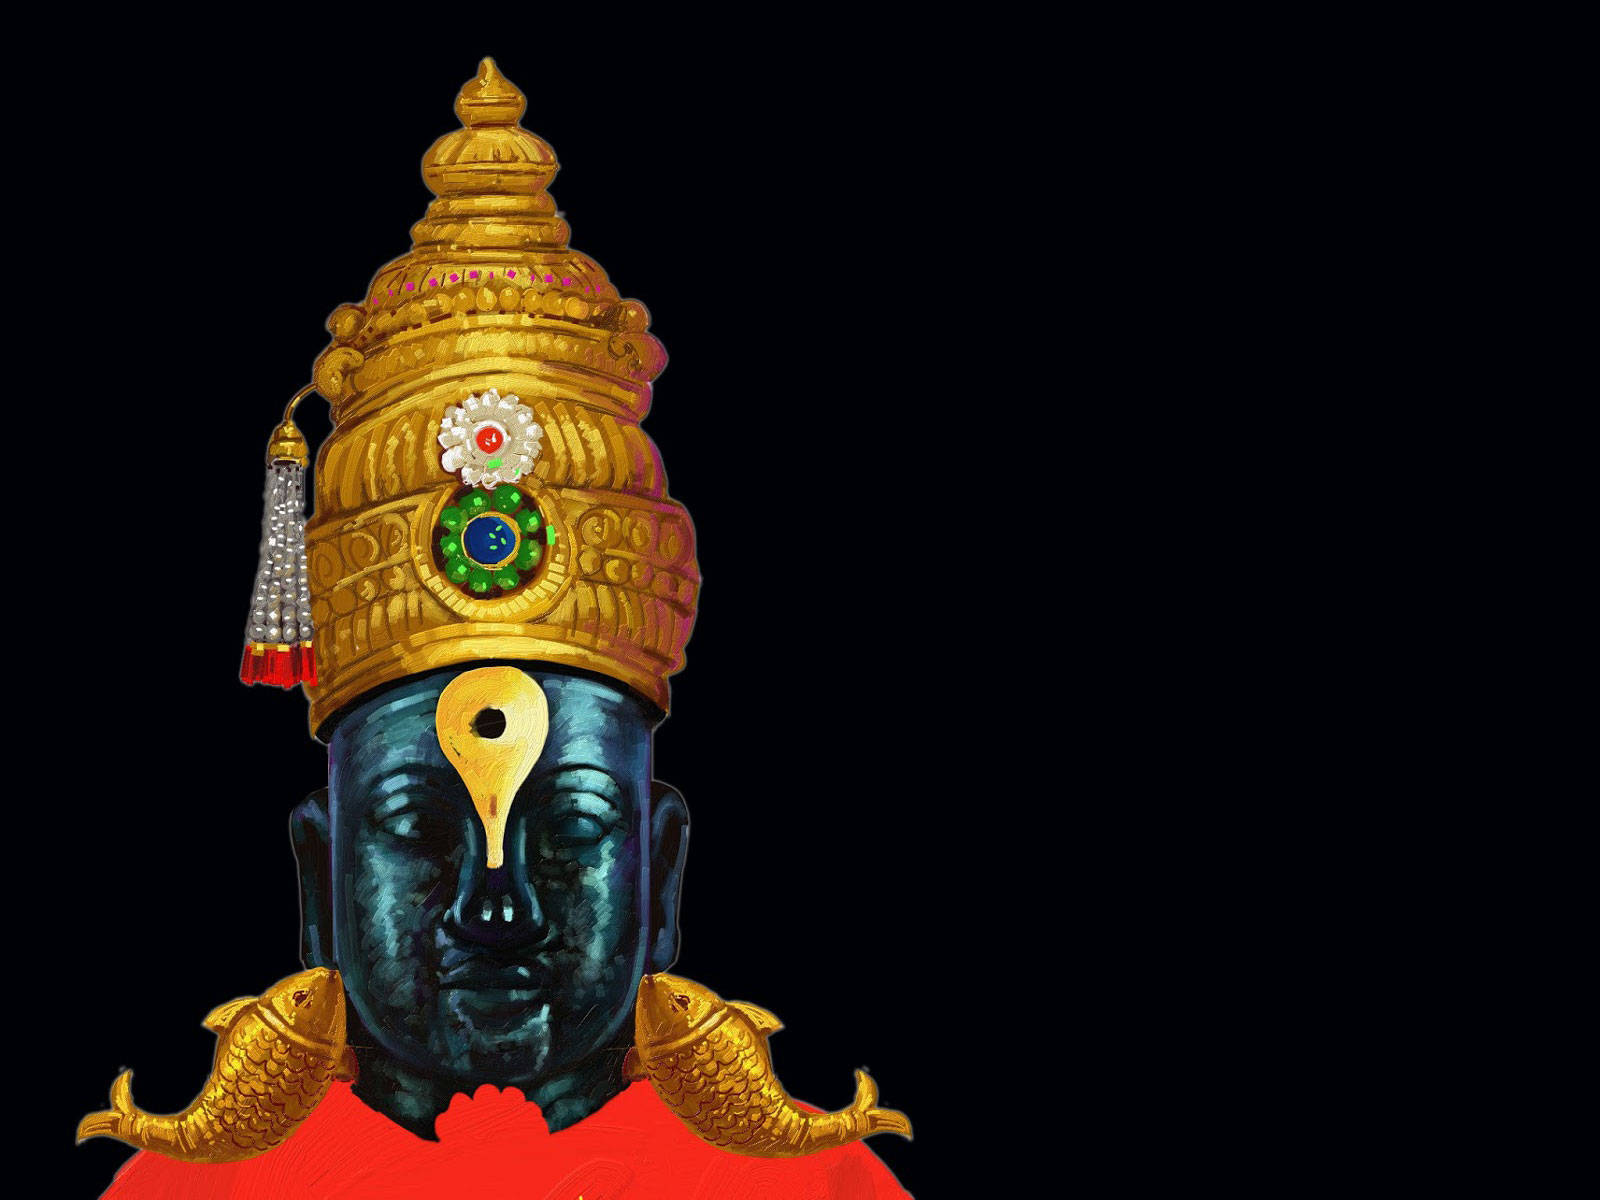 Exquisite Digital Artwork Of Lord Vithoba